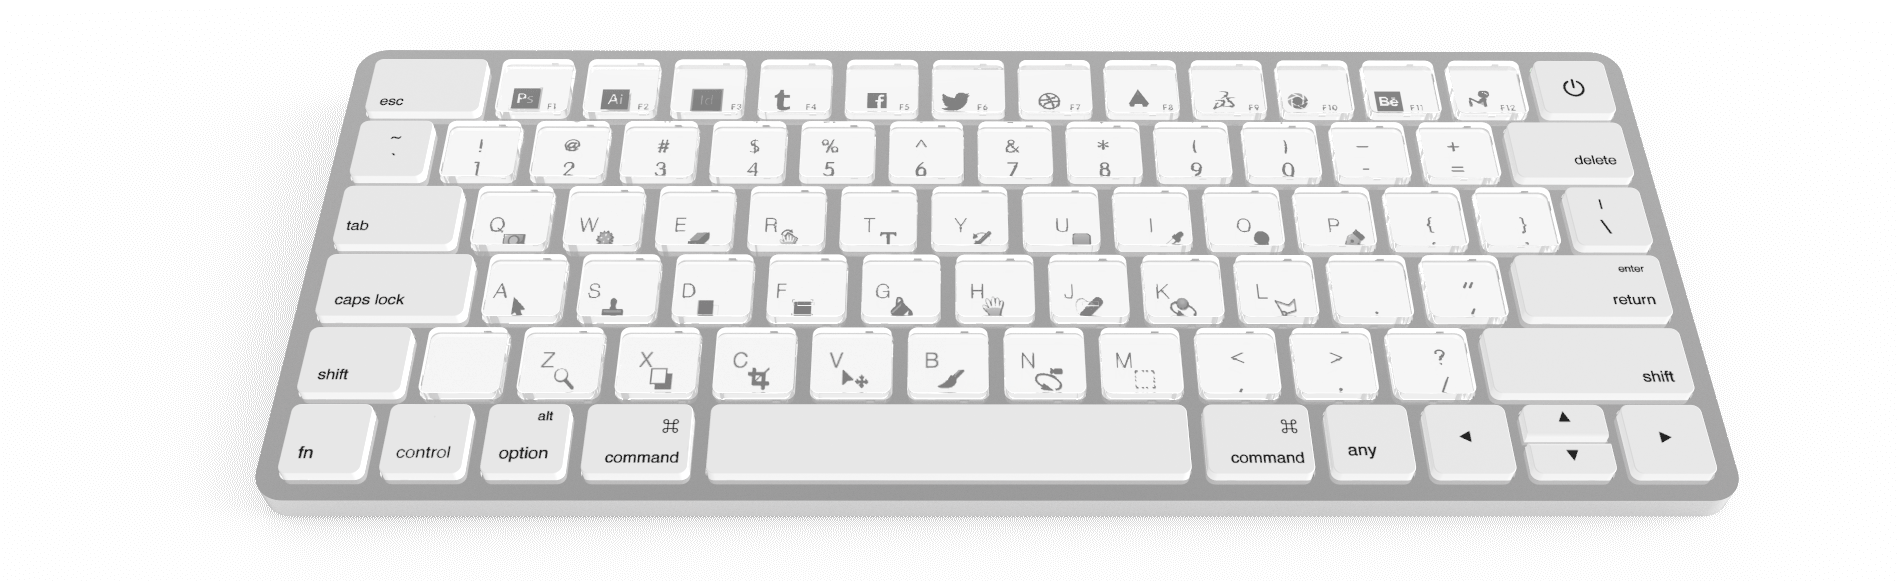 Sonder Keyboard animation